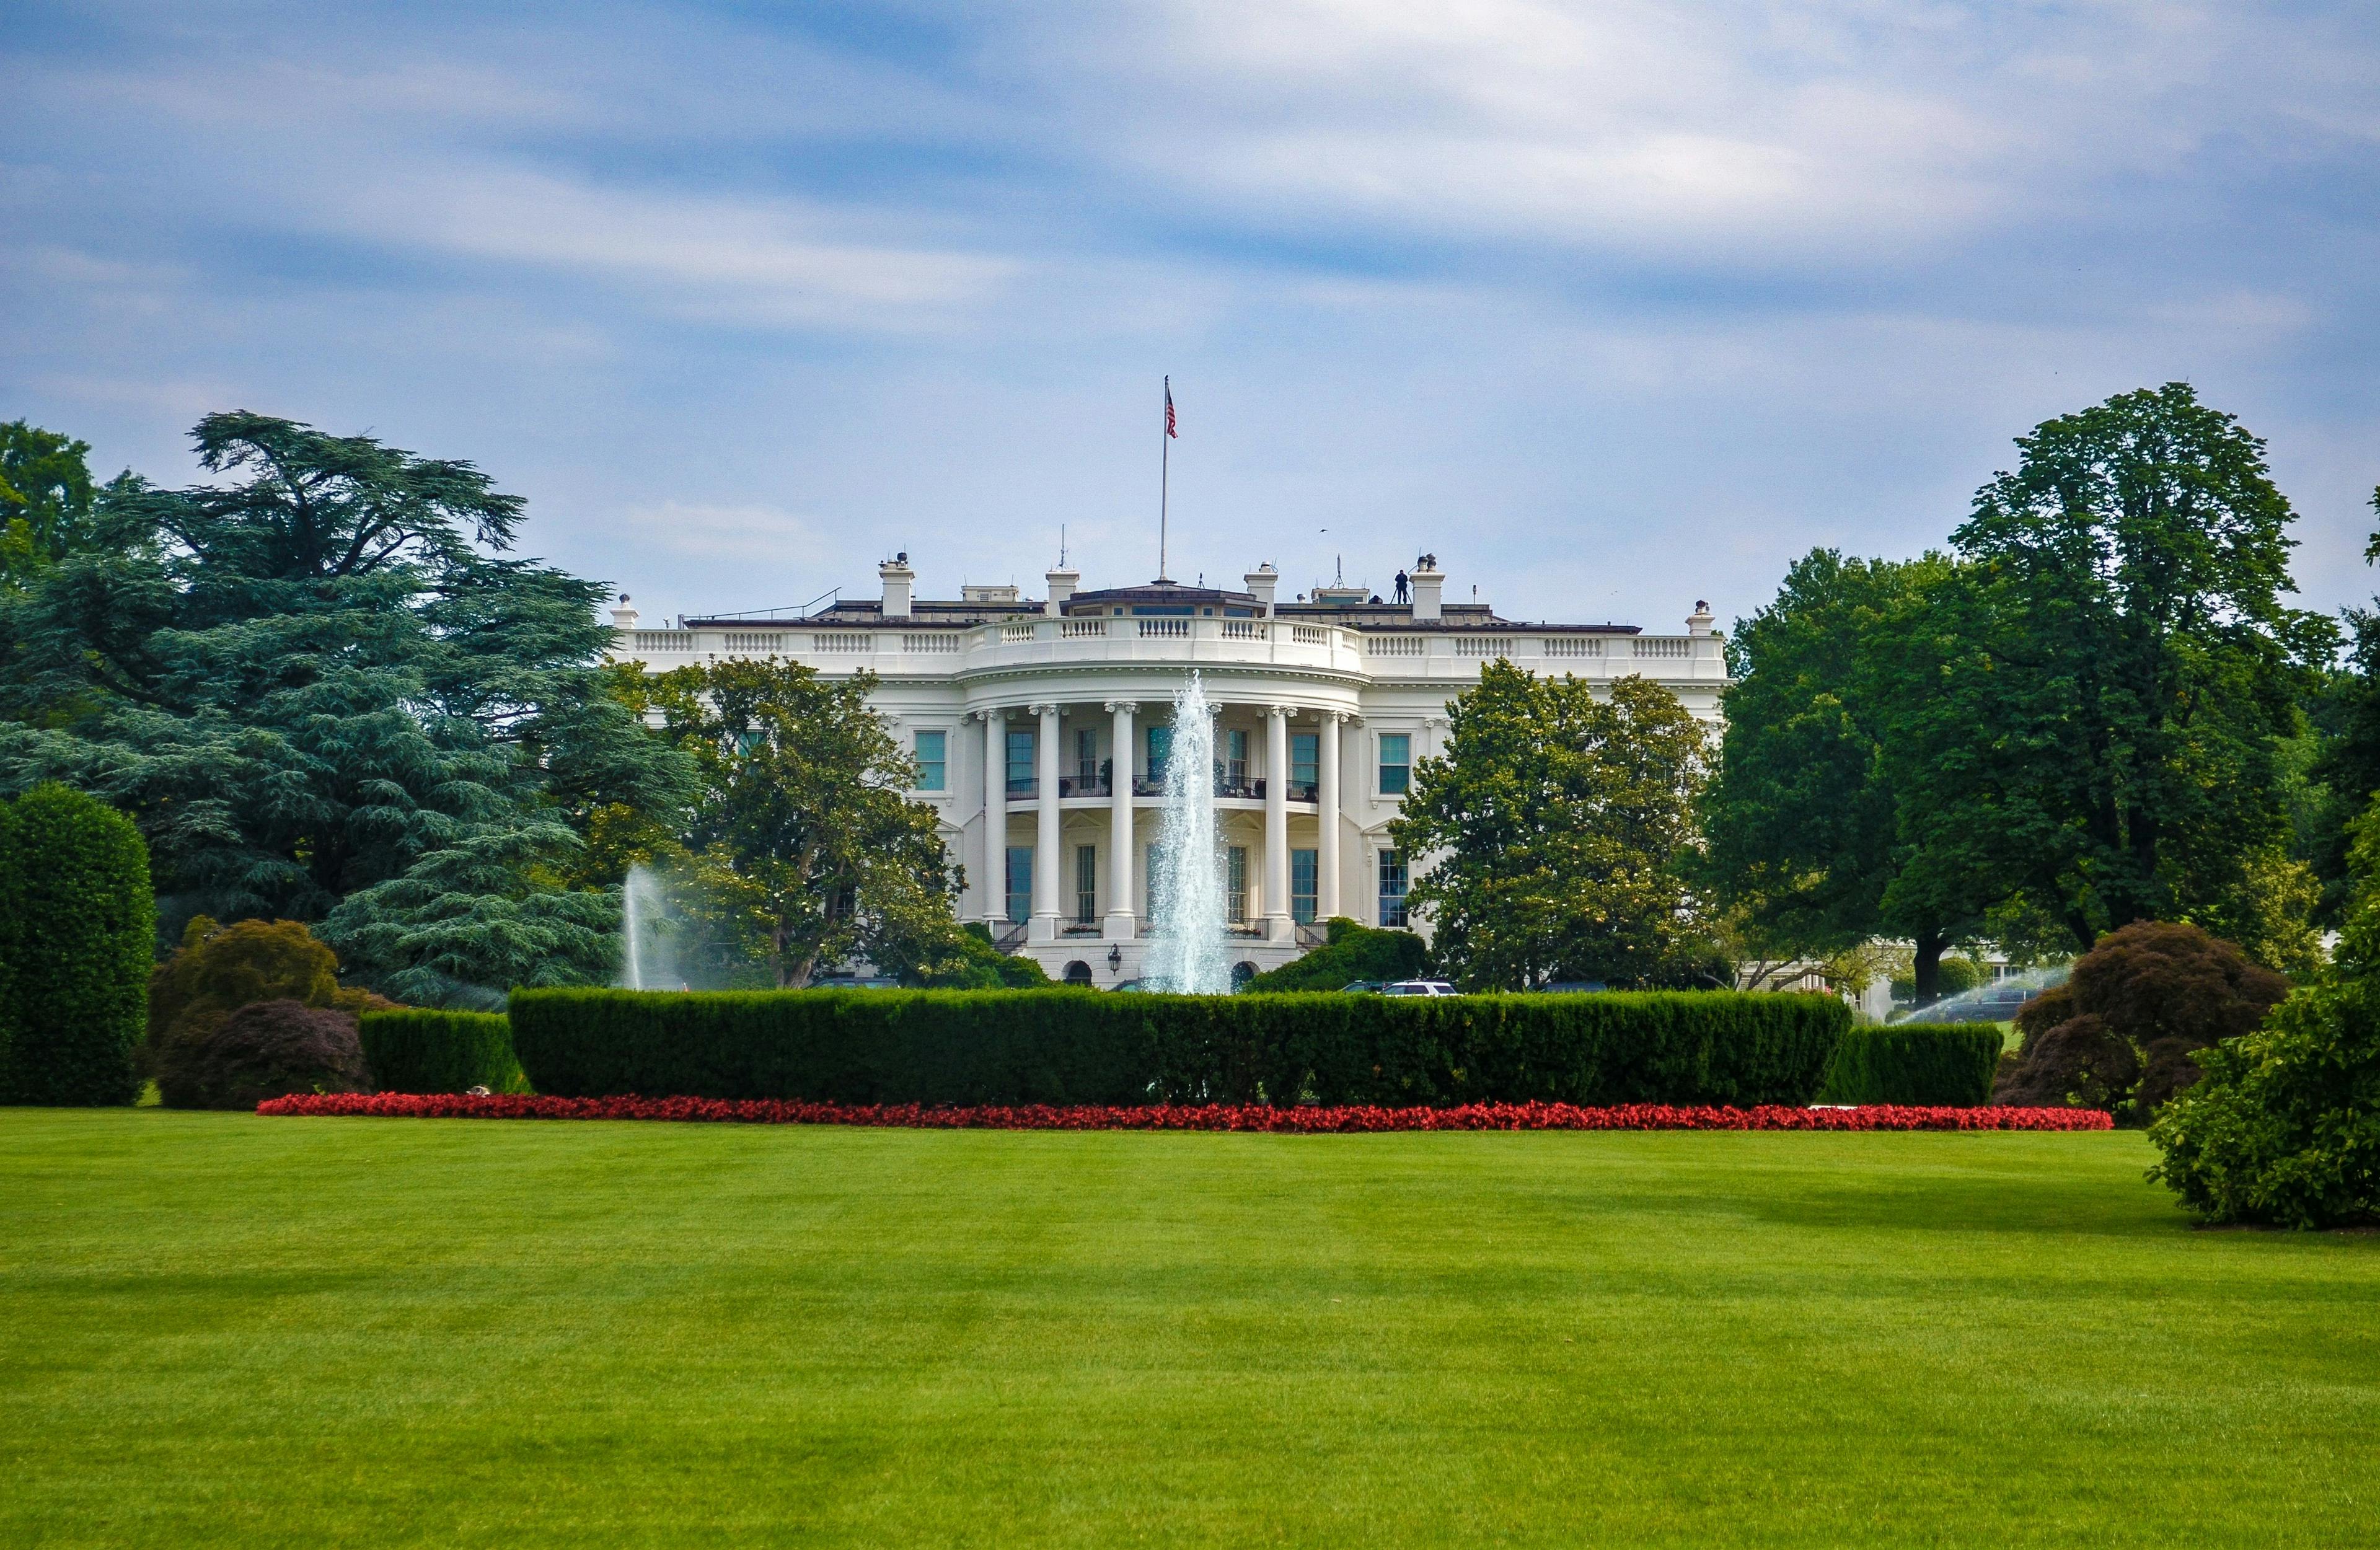 The White House in Washington D.C. USA.